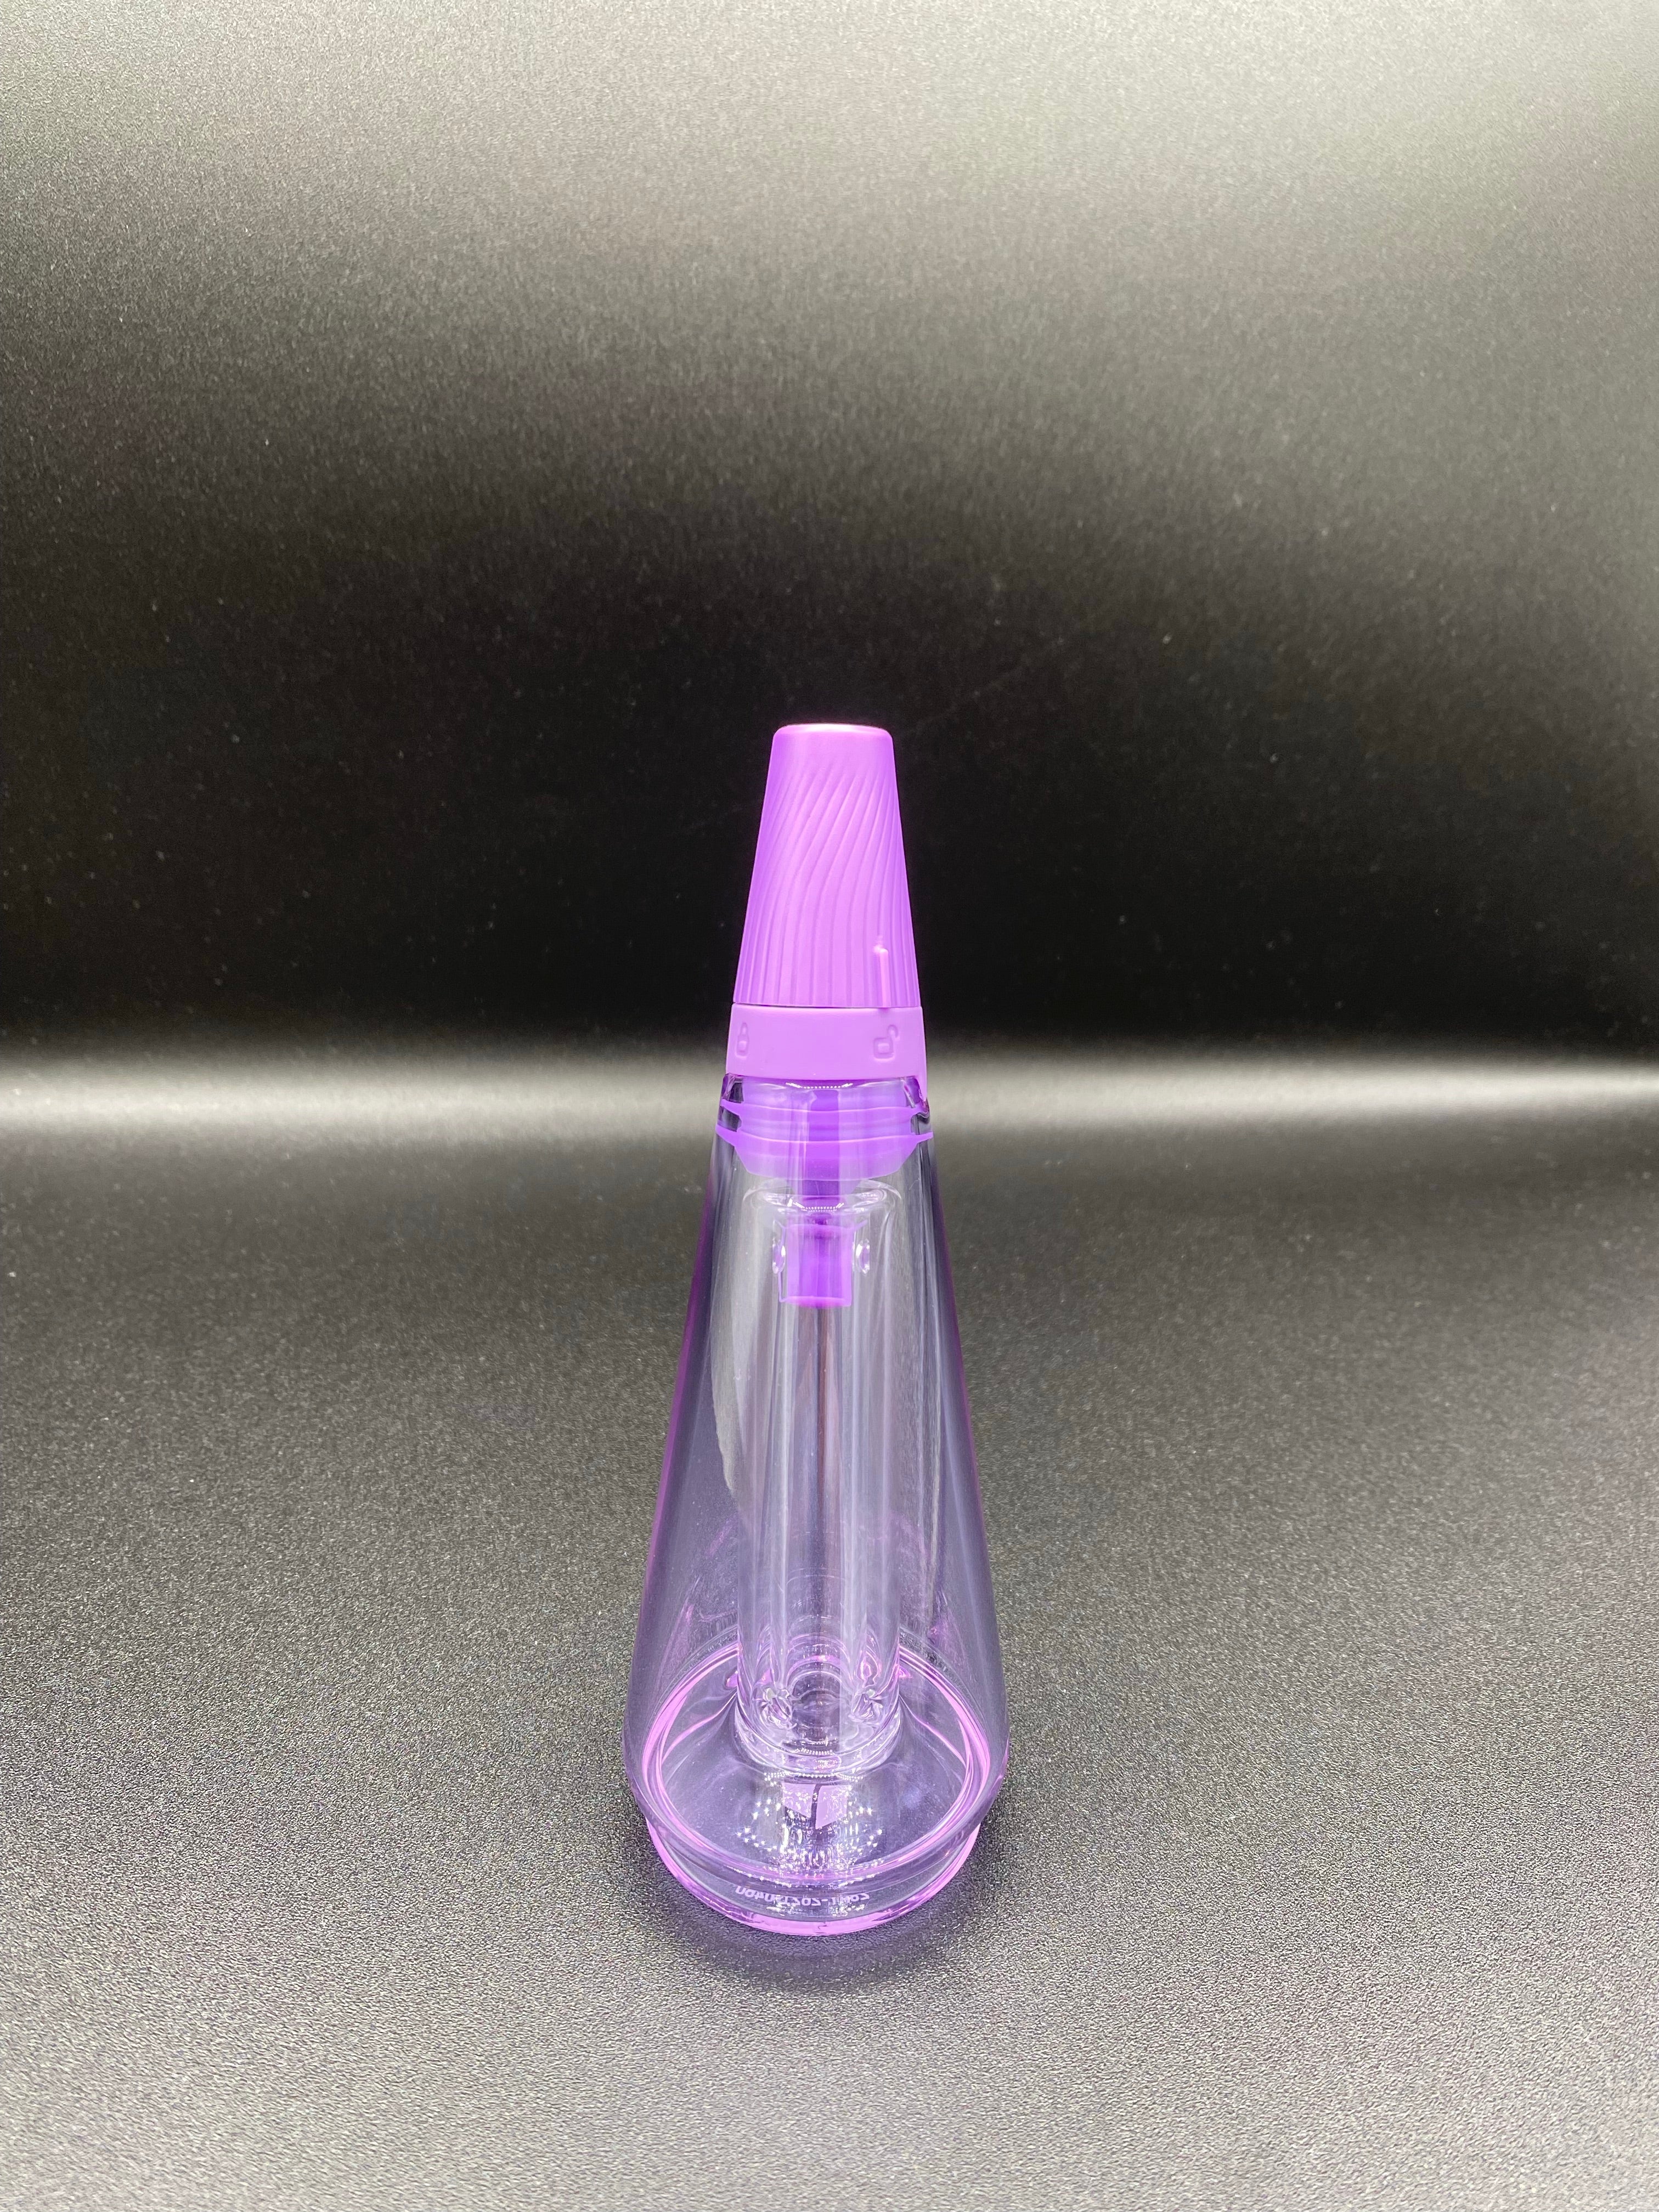 Puffco peak Ultra violet travel glass